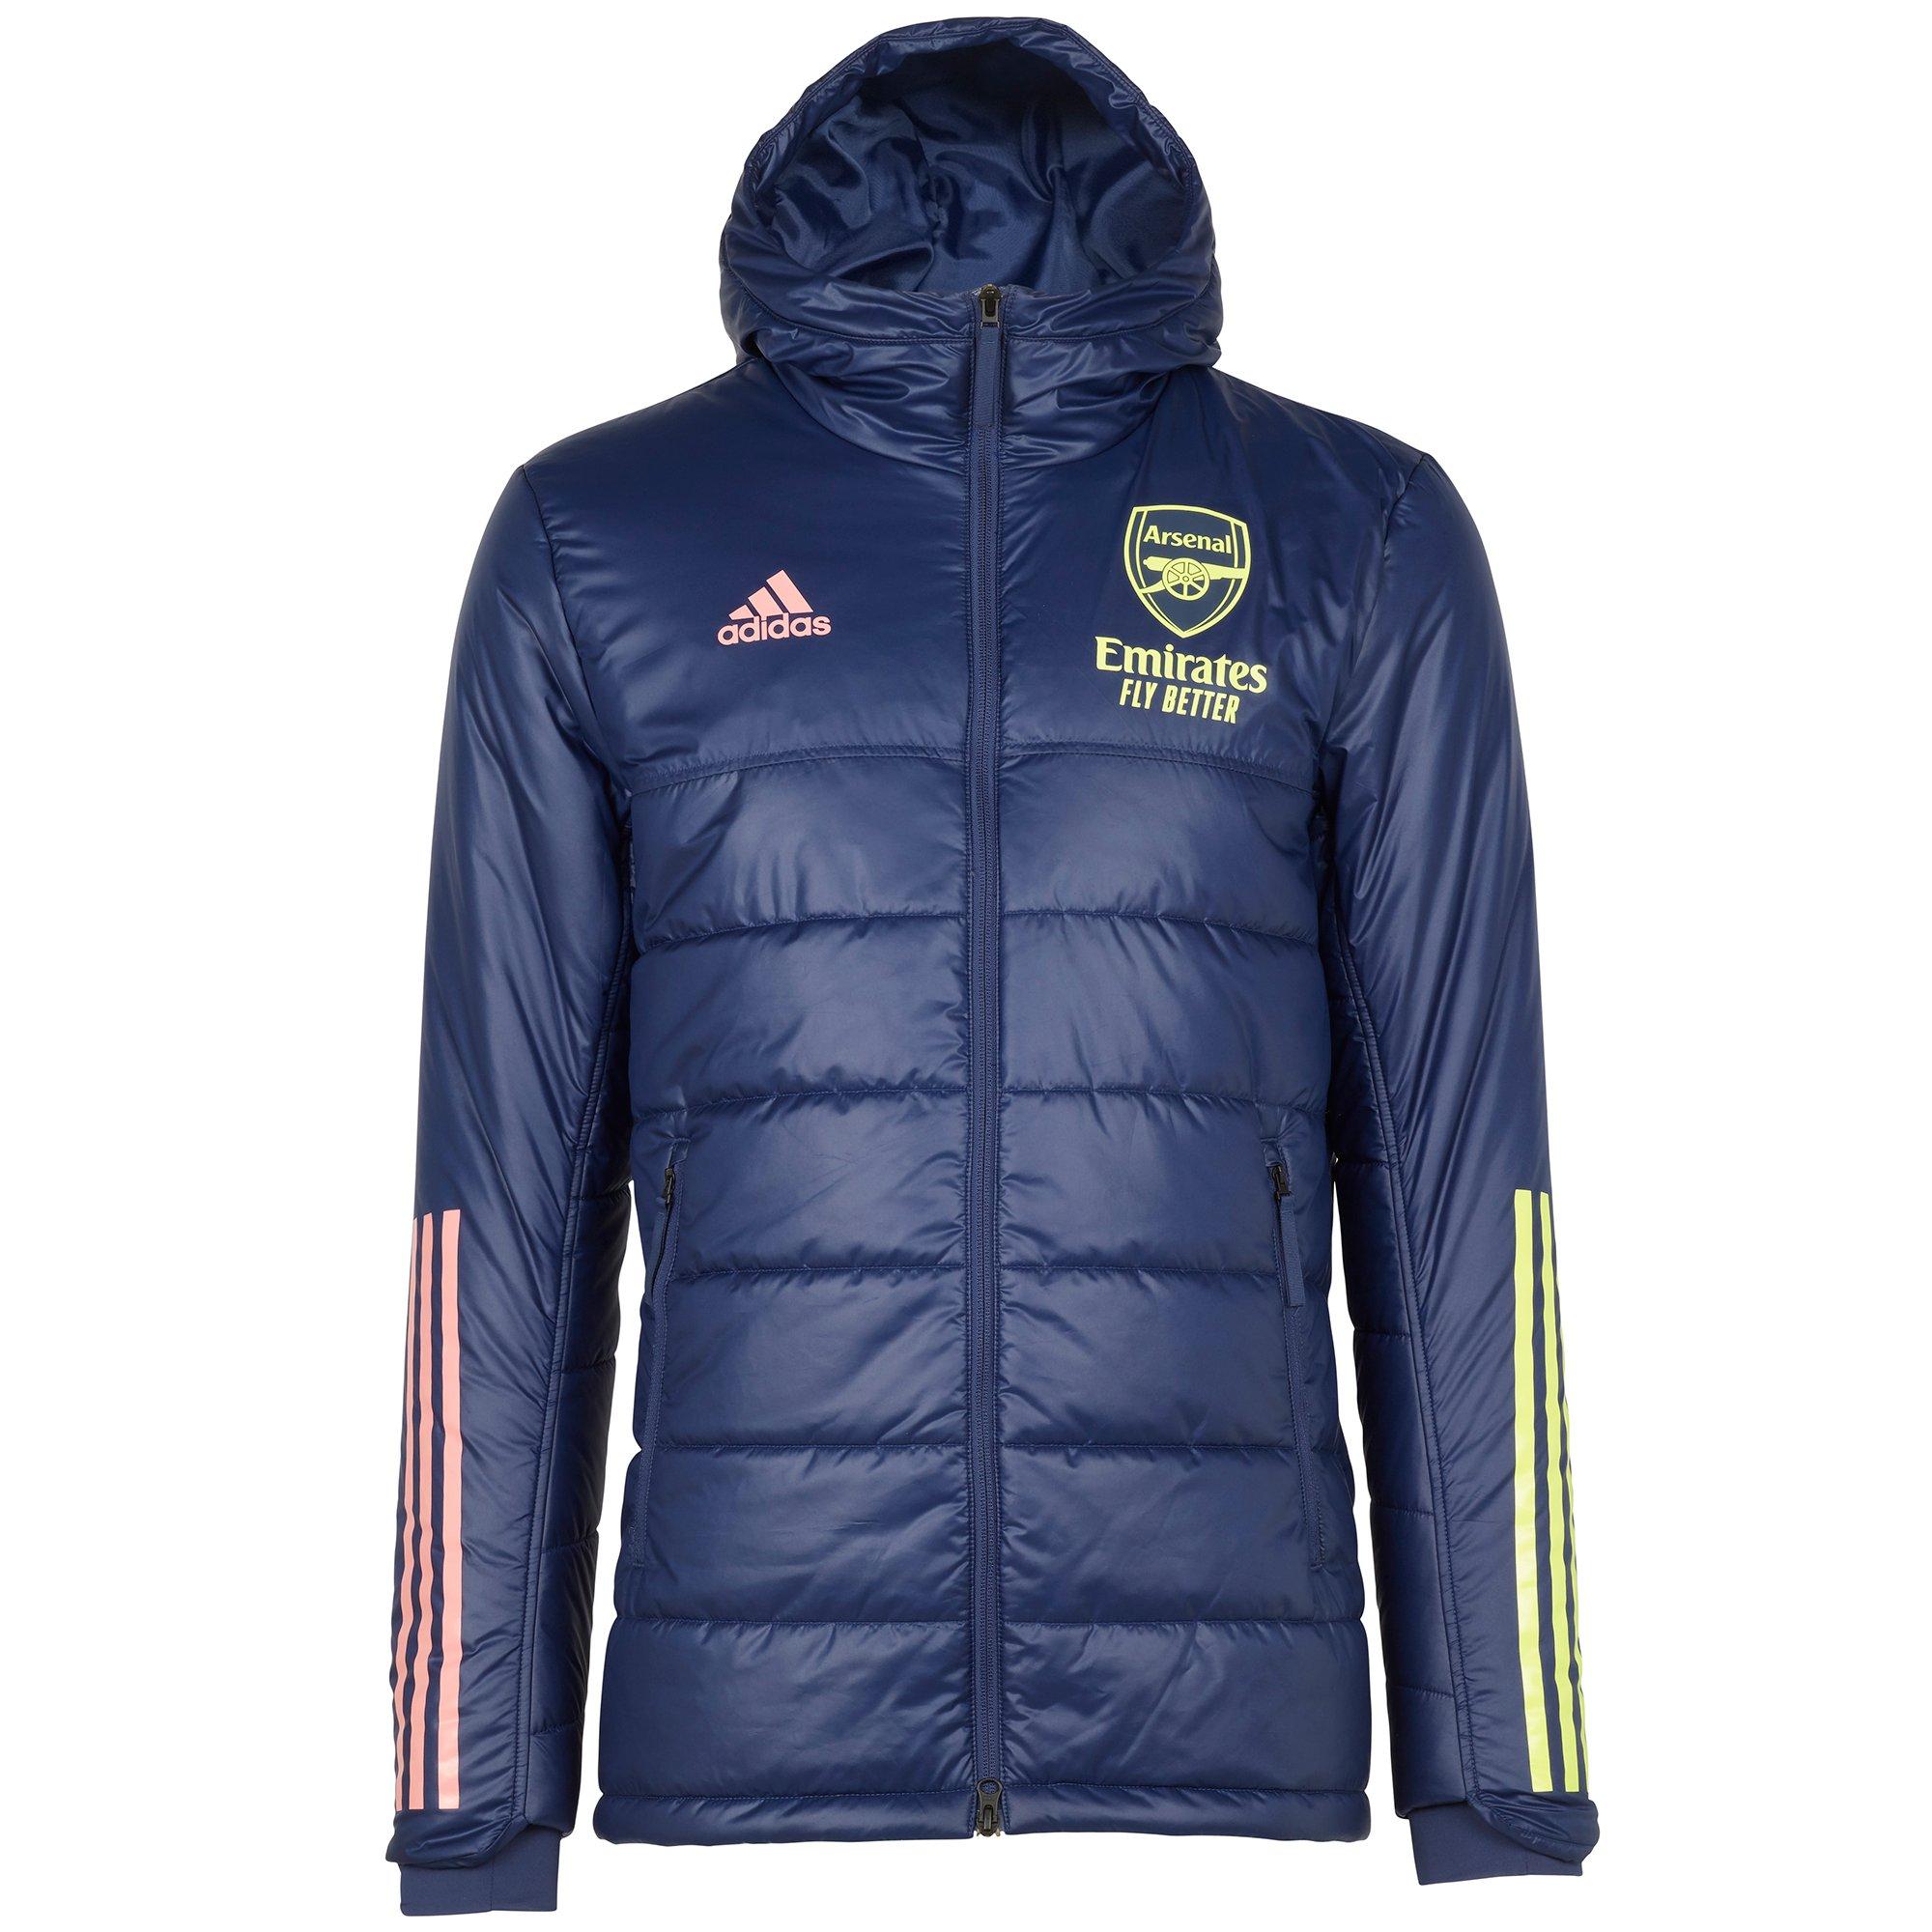 Arsenal Adult 20/21 Winter Jacket 